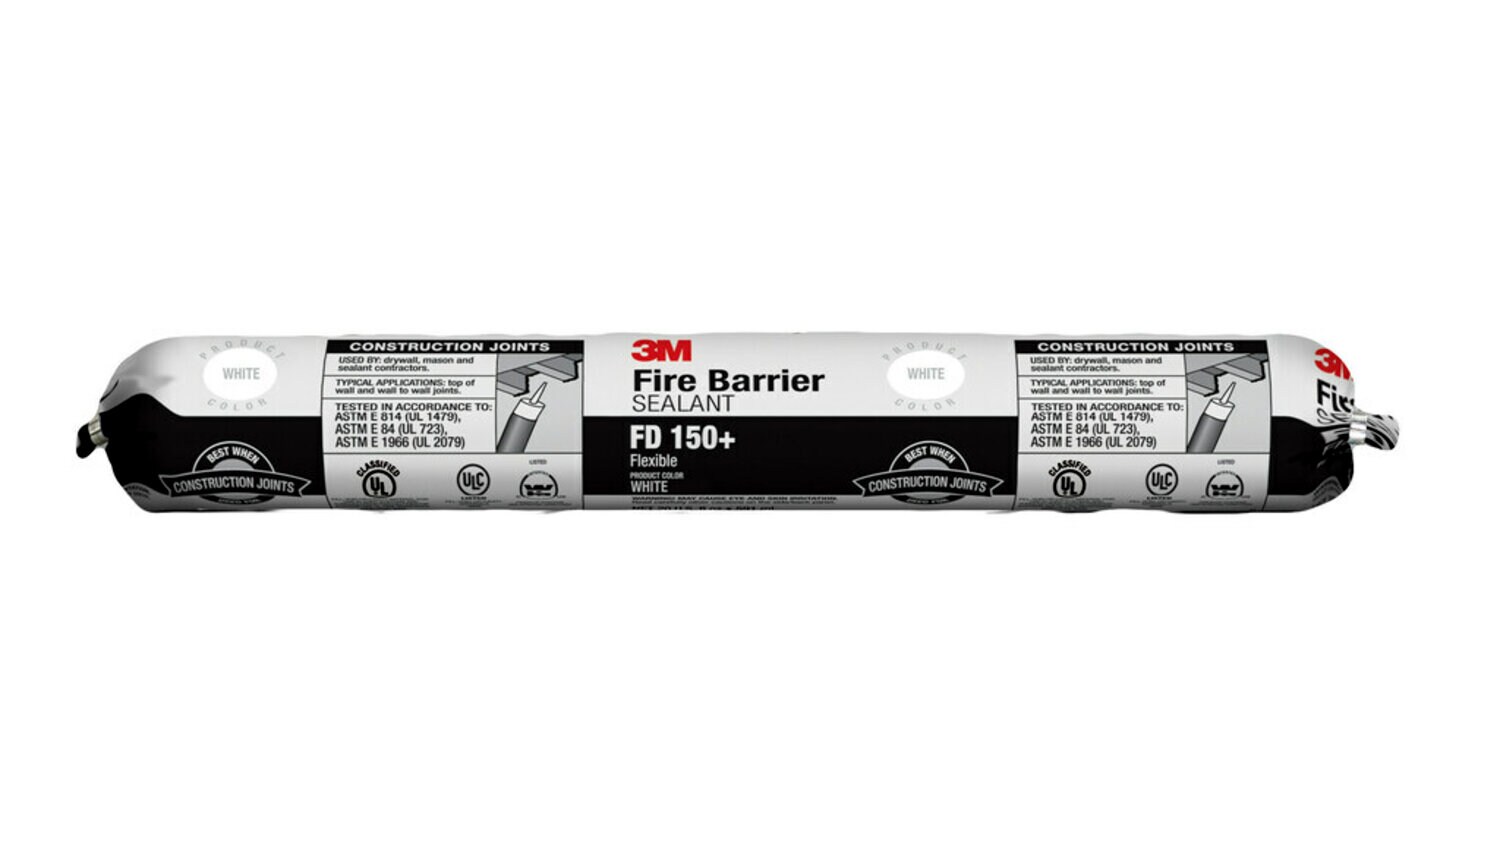 7100206702 - 3M Fire Barrier Sealant FD 150+, White, 20 fl oz Sausage pack, 12
Each/Case